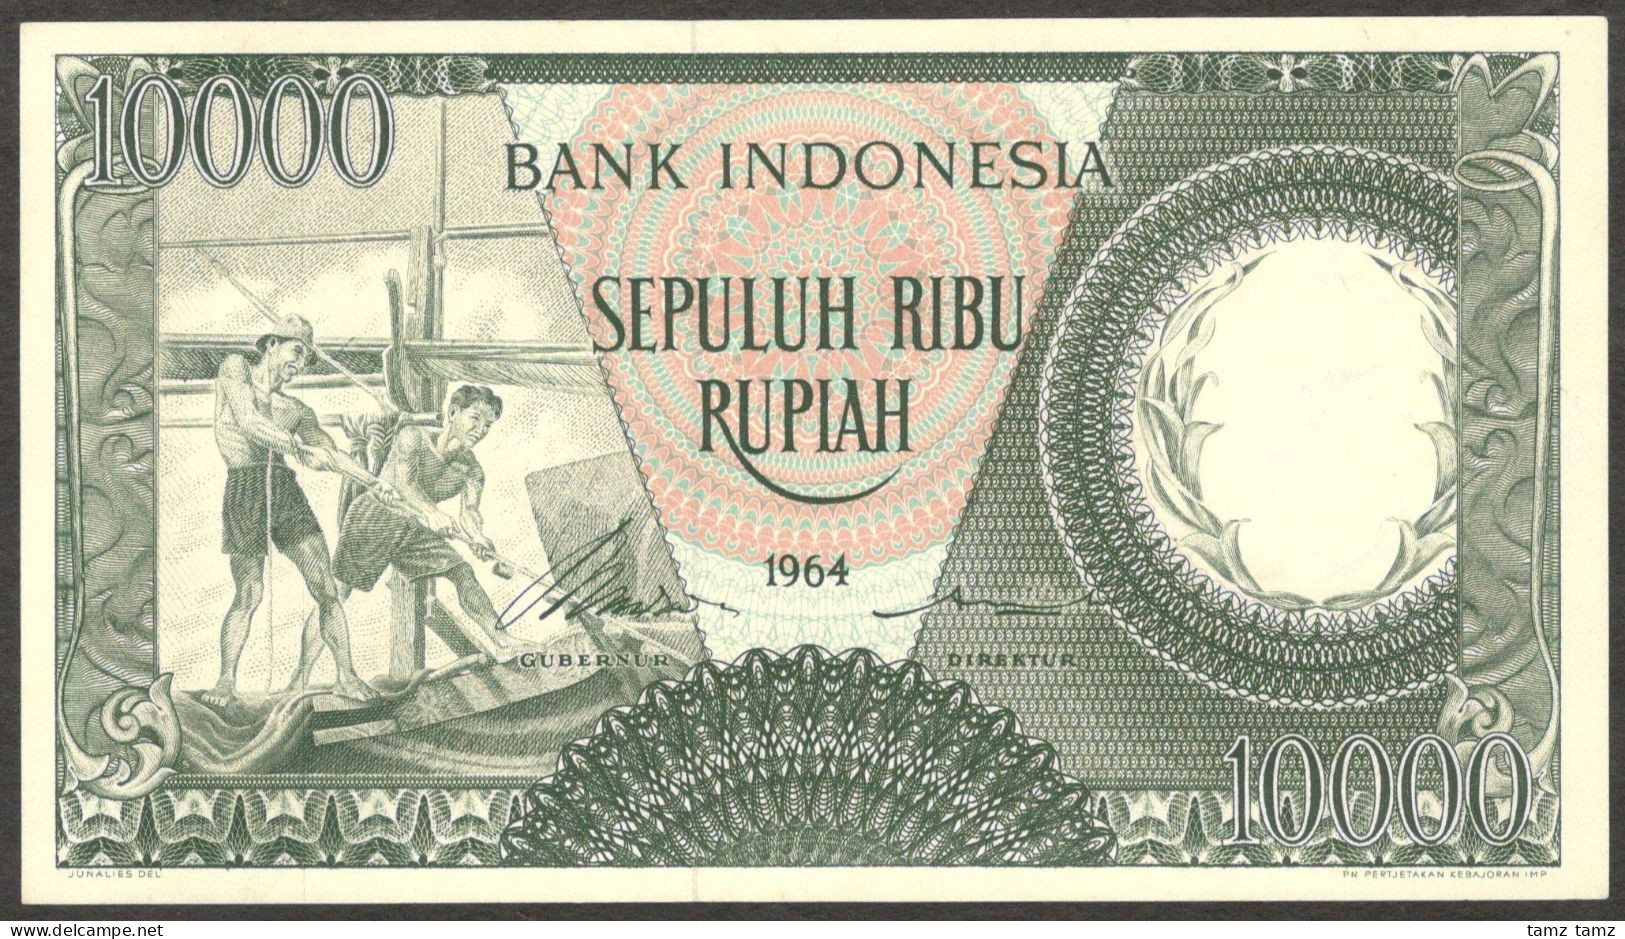 Indonesia 10000 10,000 Rupiah Green Fisherman P-100 1964 UNC - Indonesien